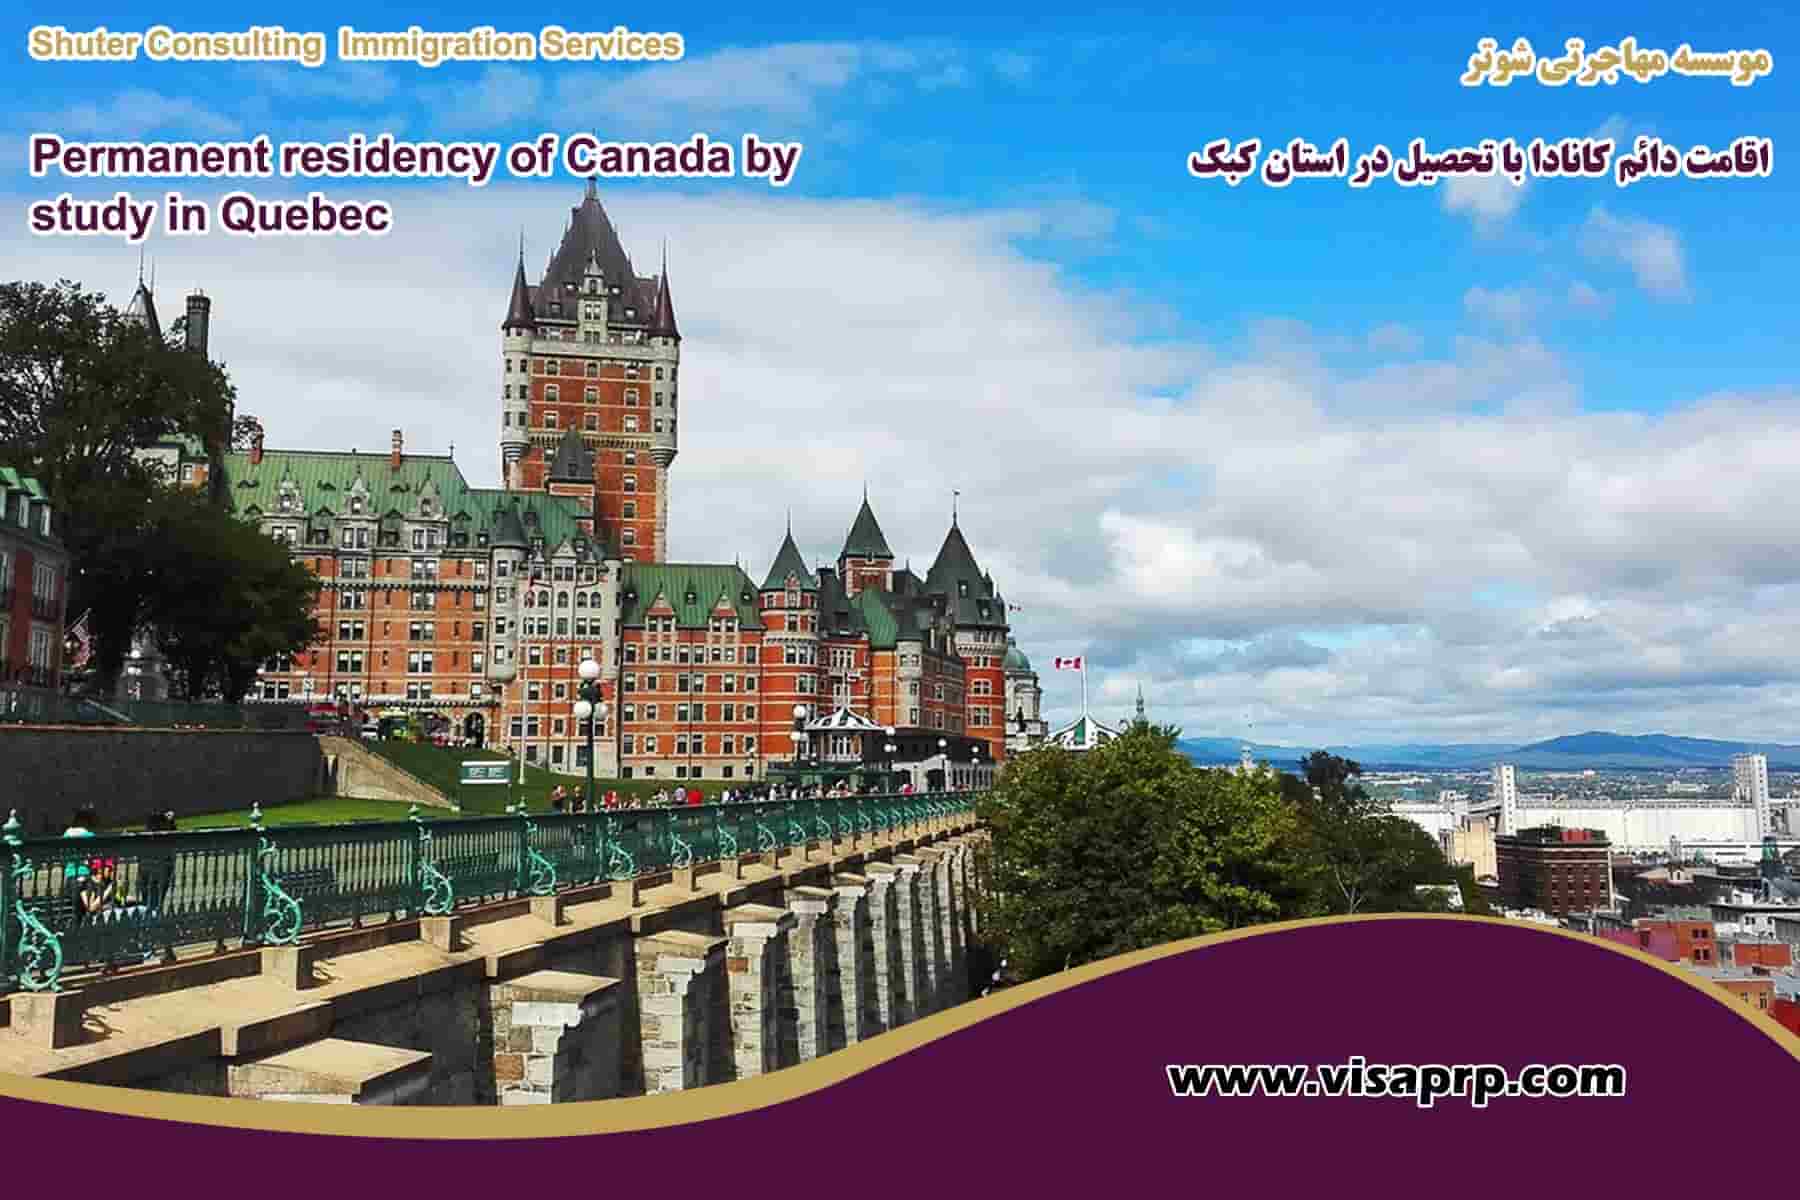 Quebec study permanent resident